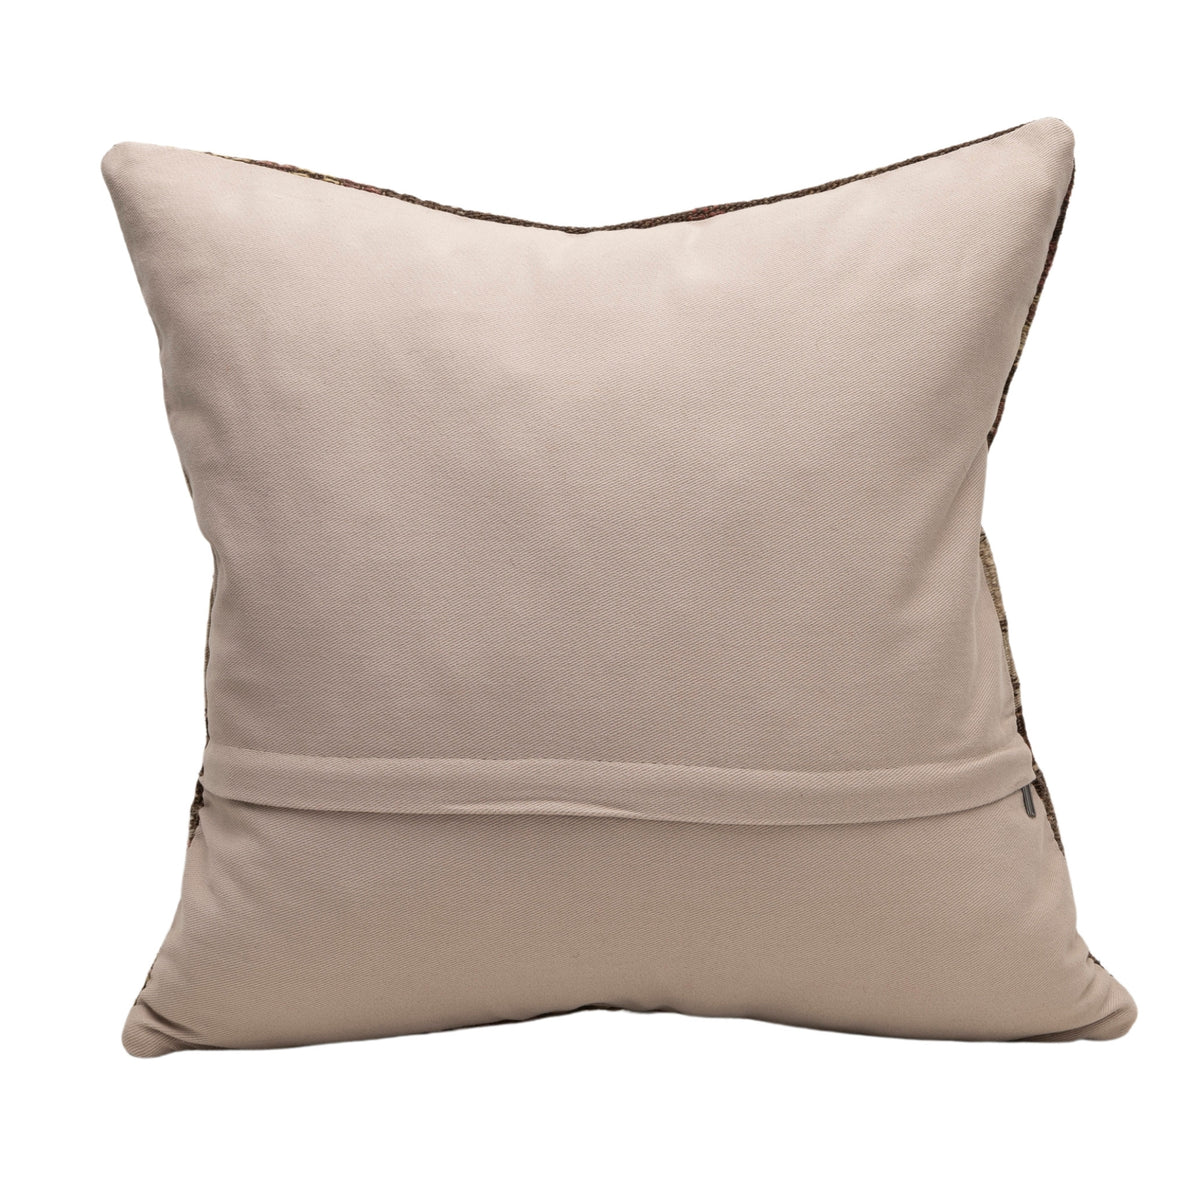 Handwoven Neutral Kilim Pillow Cover 20" x 20"